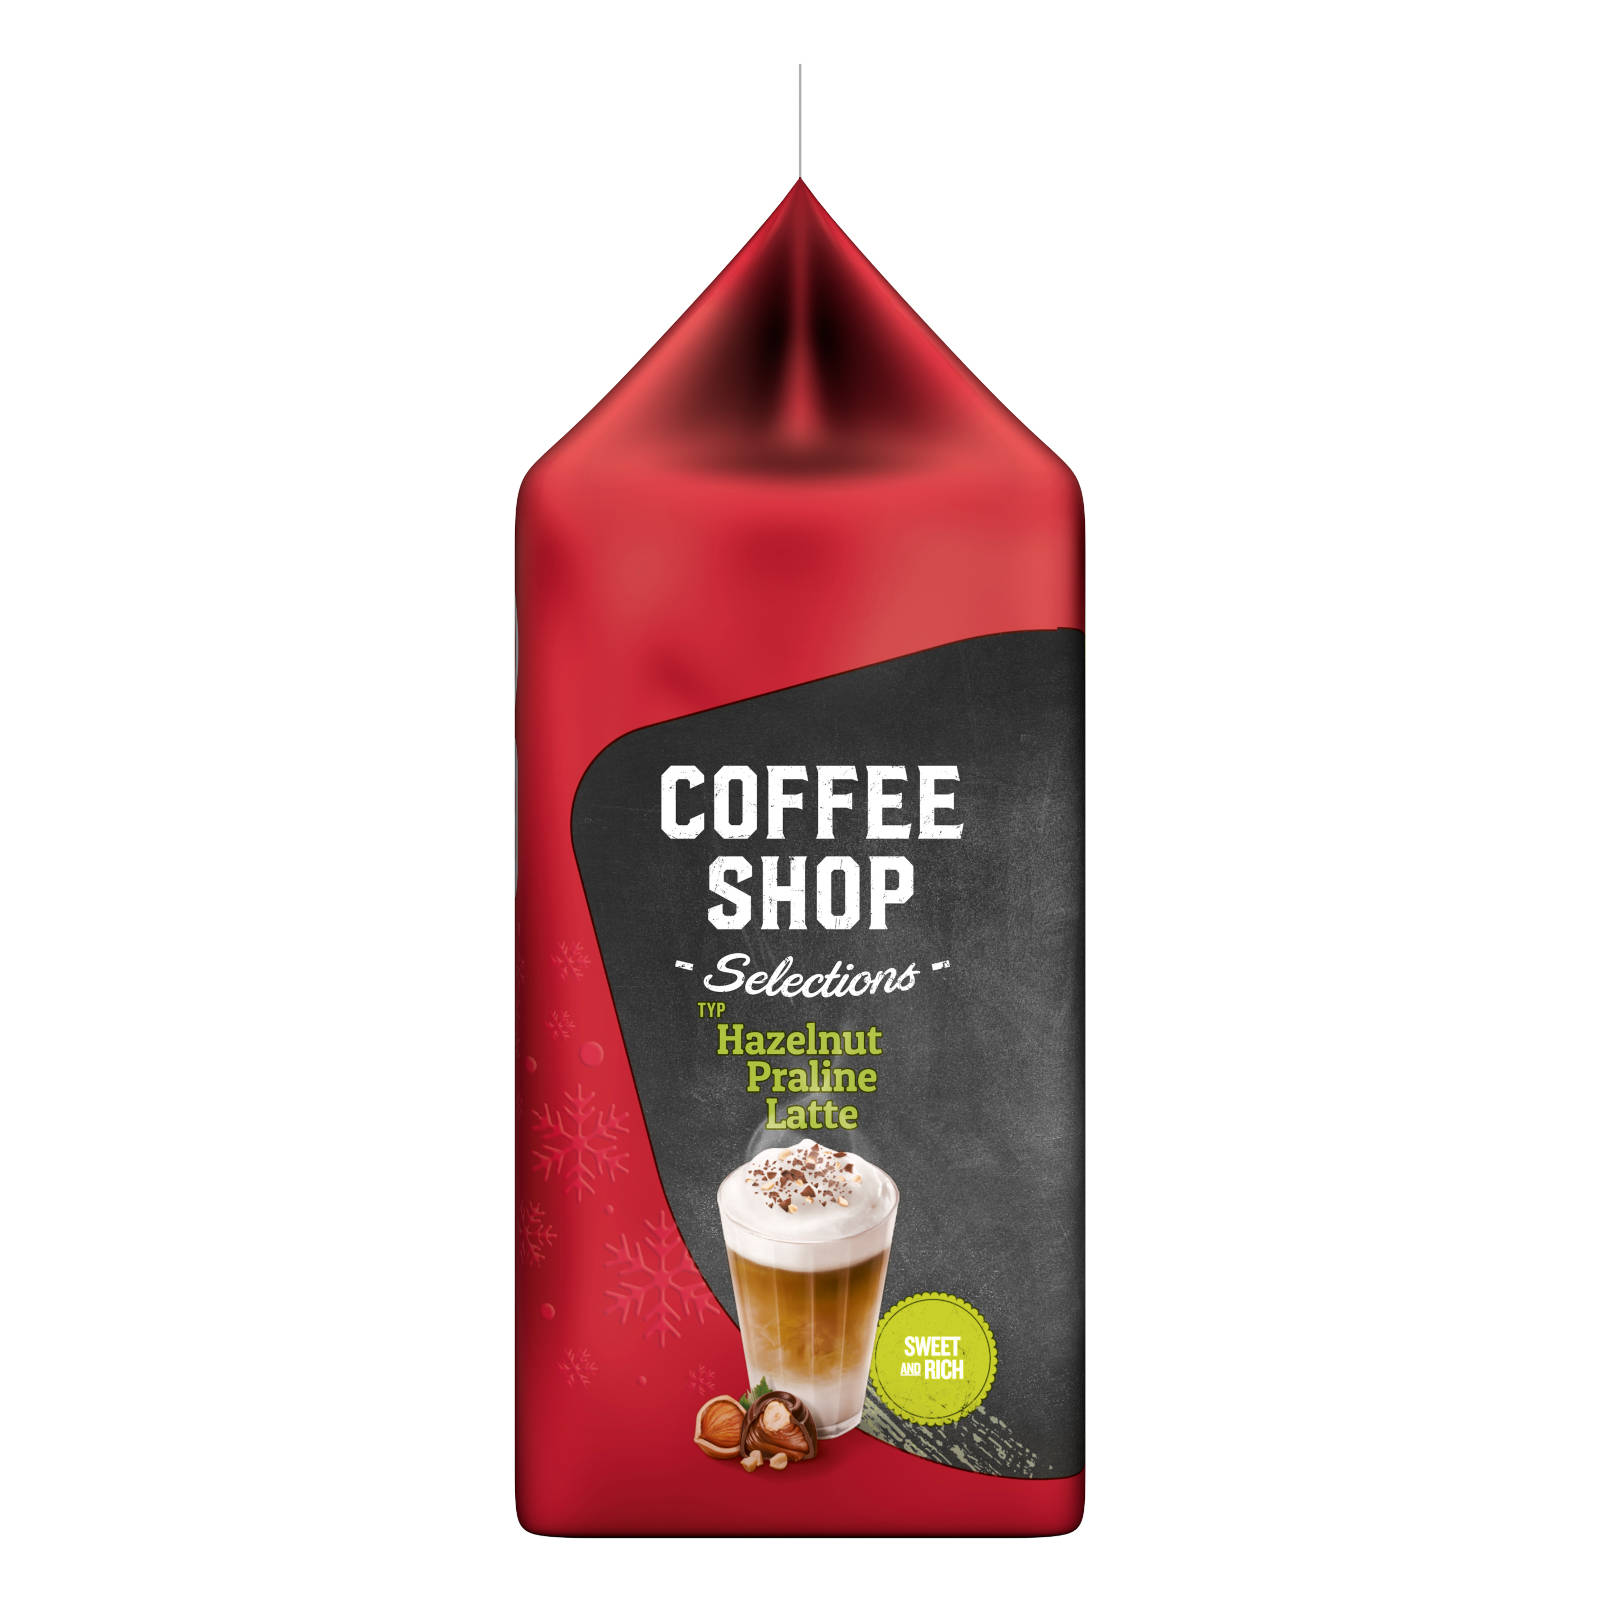 Typ Latte Selections Praline Shop Kaffeekapseln Coffee (T-Disc Maschine 5x8 (Tassimo Hazelnut TASSIMO JDE System)) Kapseln Getränke